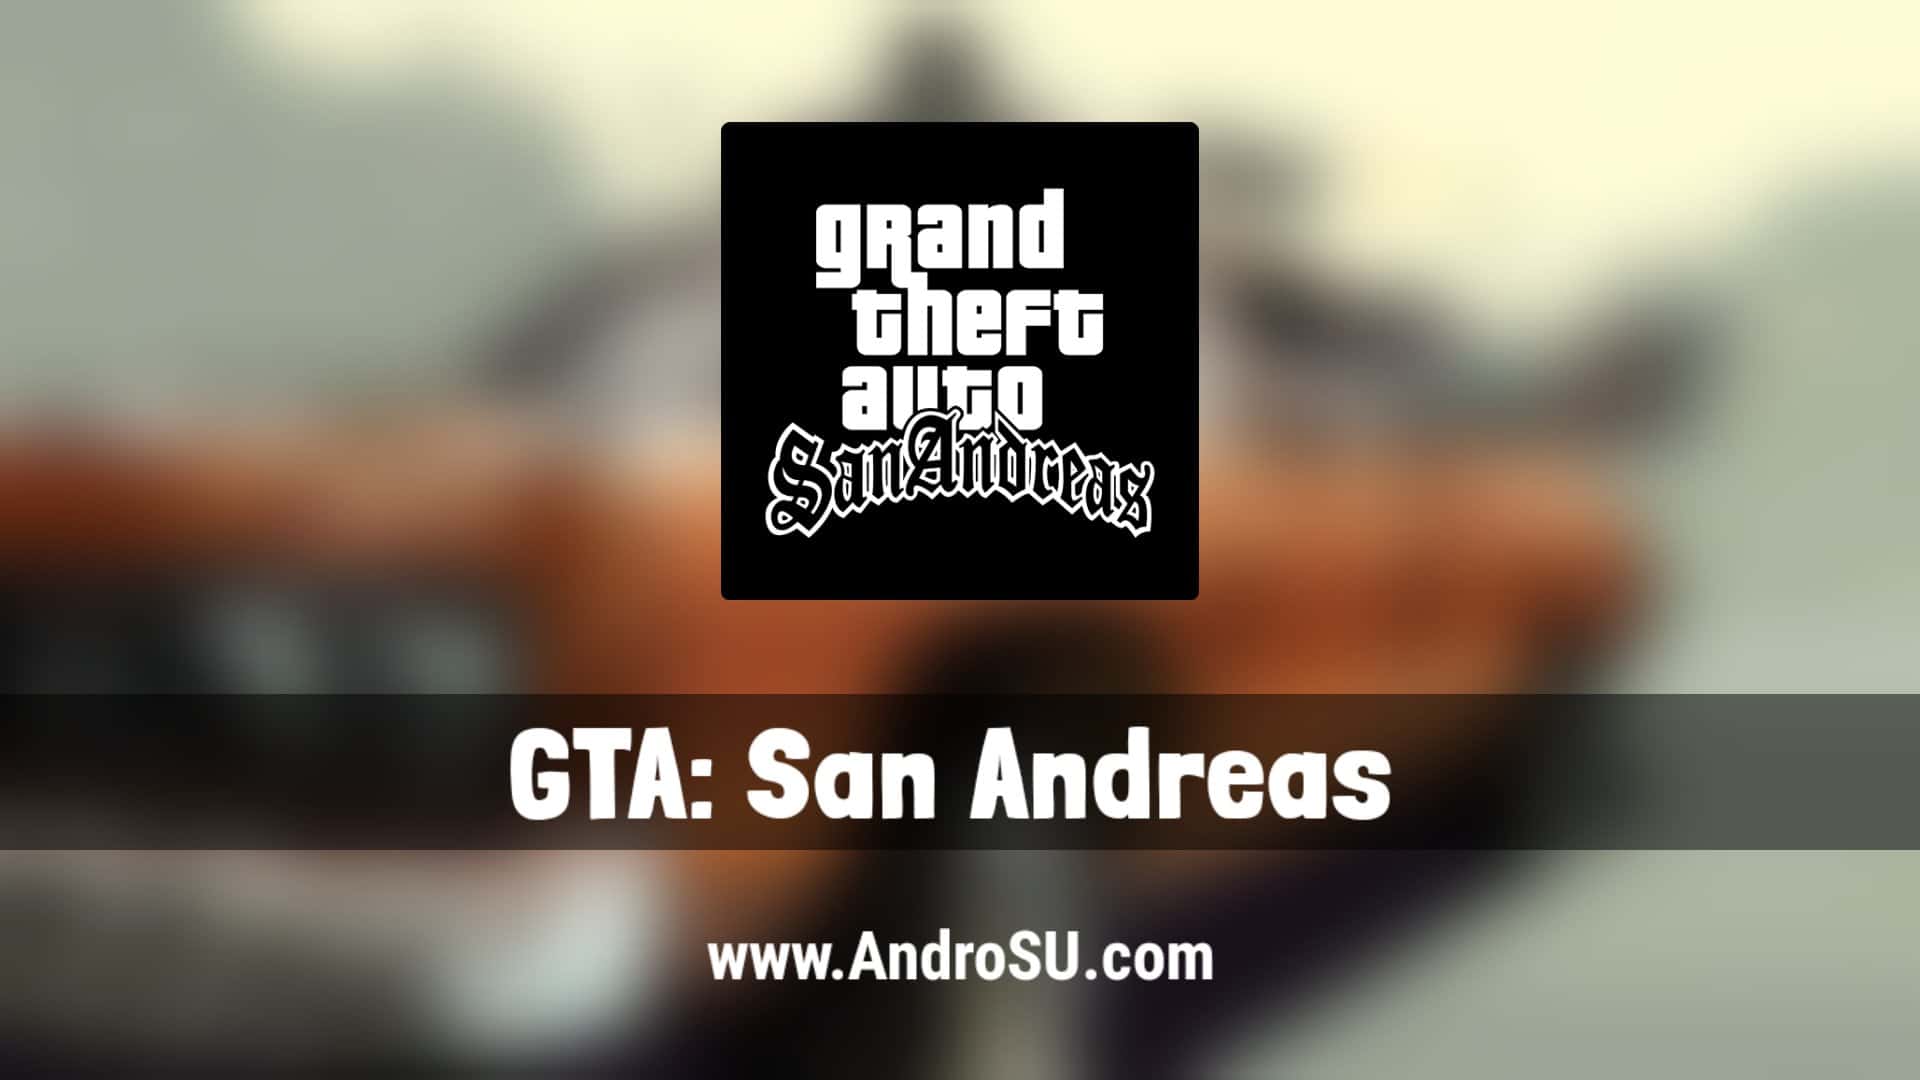 Download GTA San Andreas Mobile v2.10 for GTA San Andreas (iOS, Android)